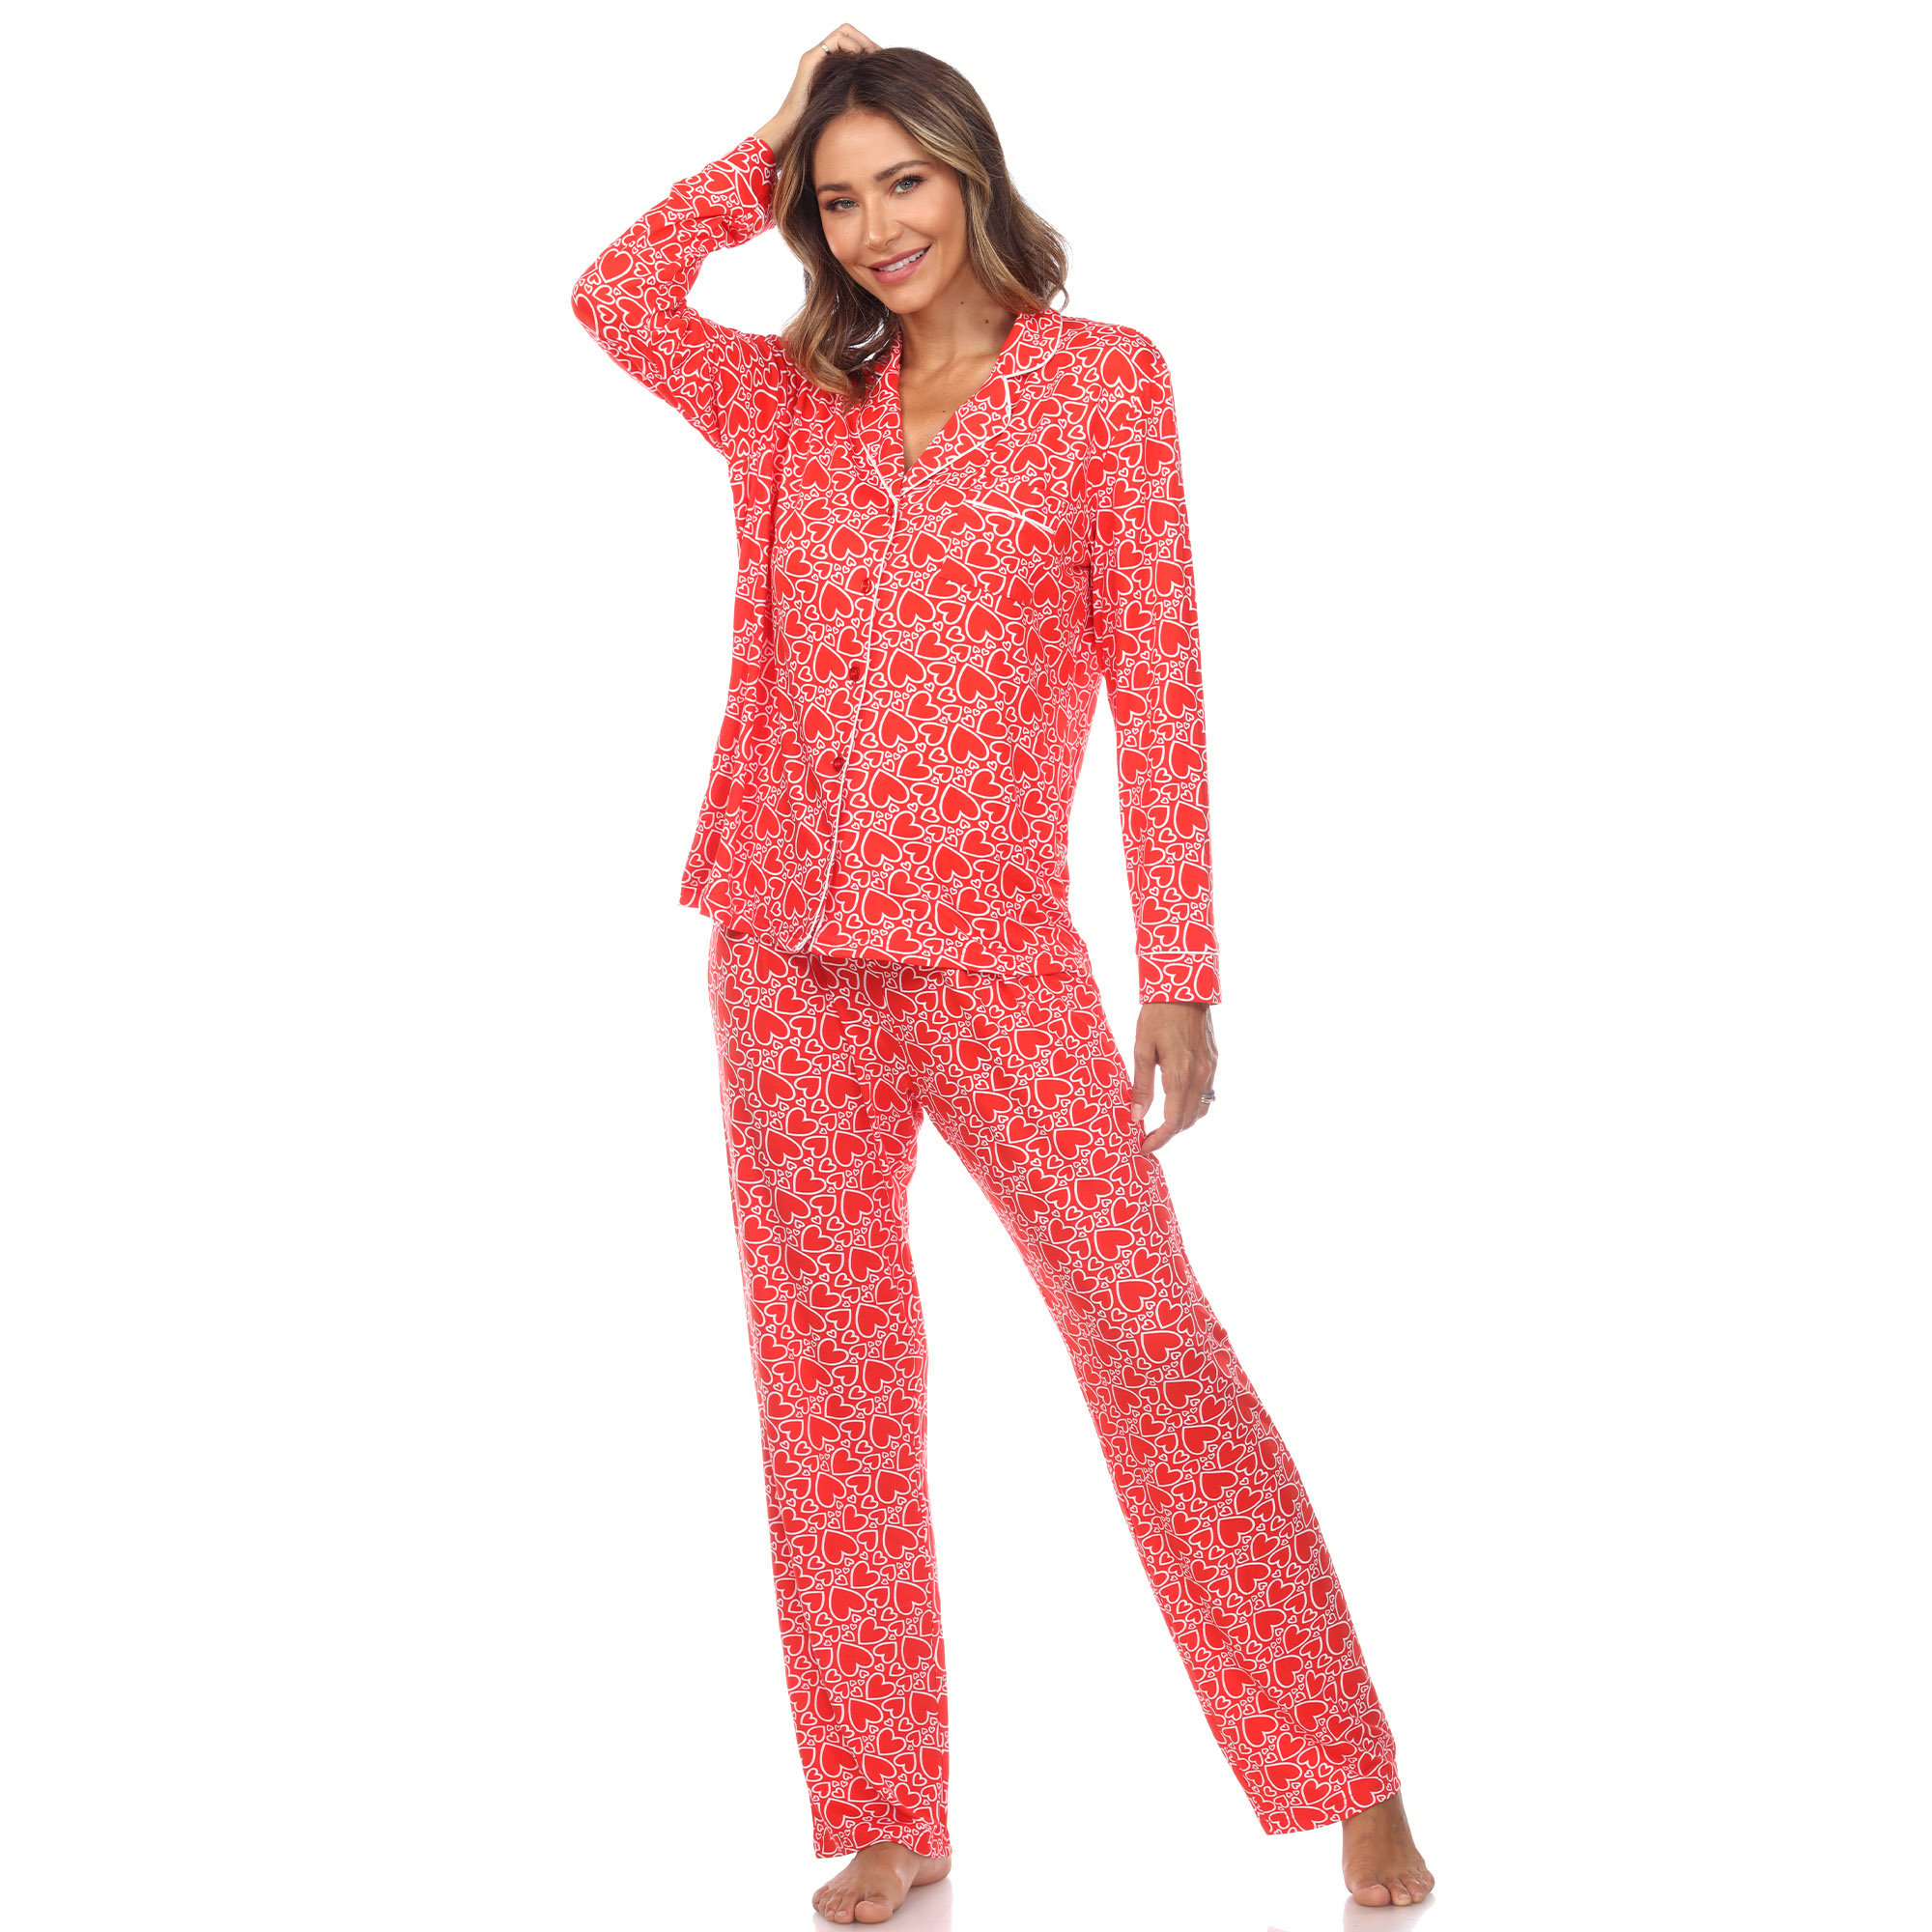 White Mark Women's Long Sleeve Hearts Pajama Set - Red, 2X